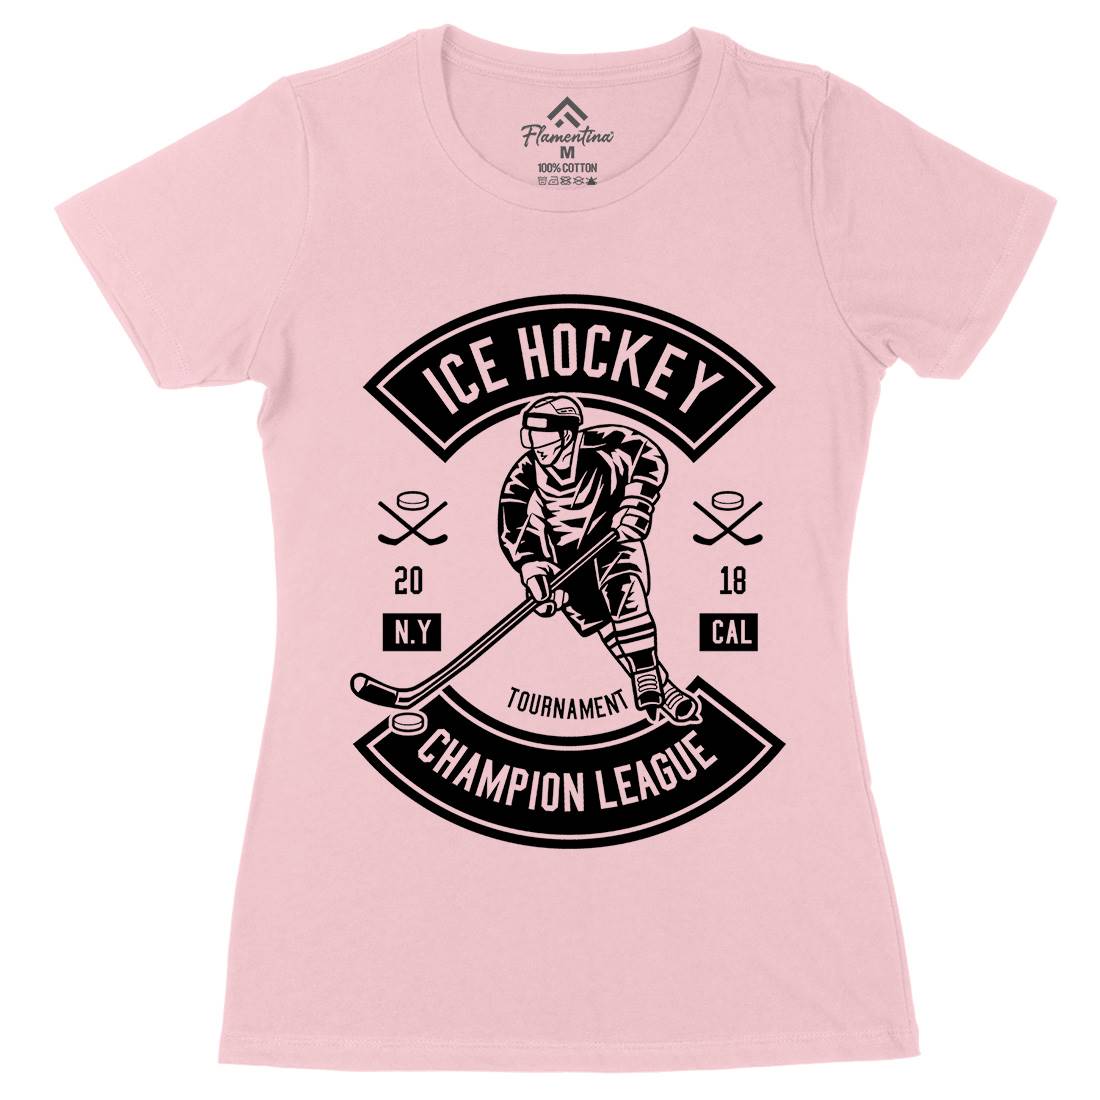 Ice Hockey Champion League Womens Organic Crew Neck T-Shirt Sport B564